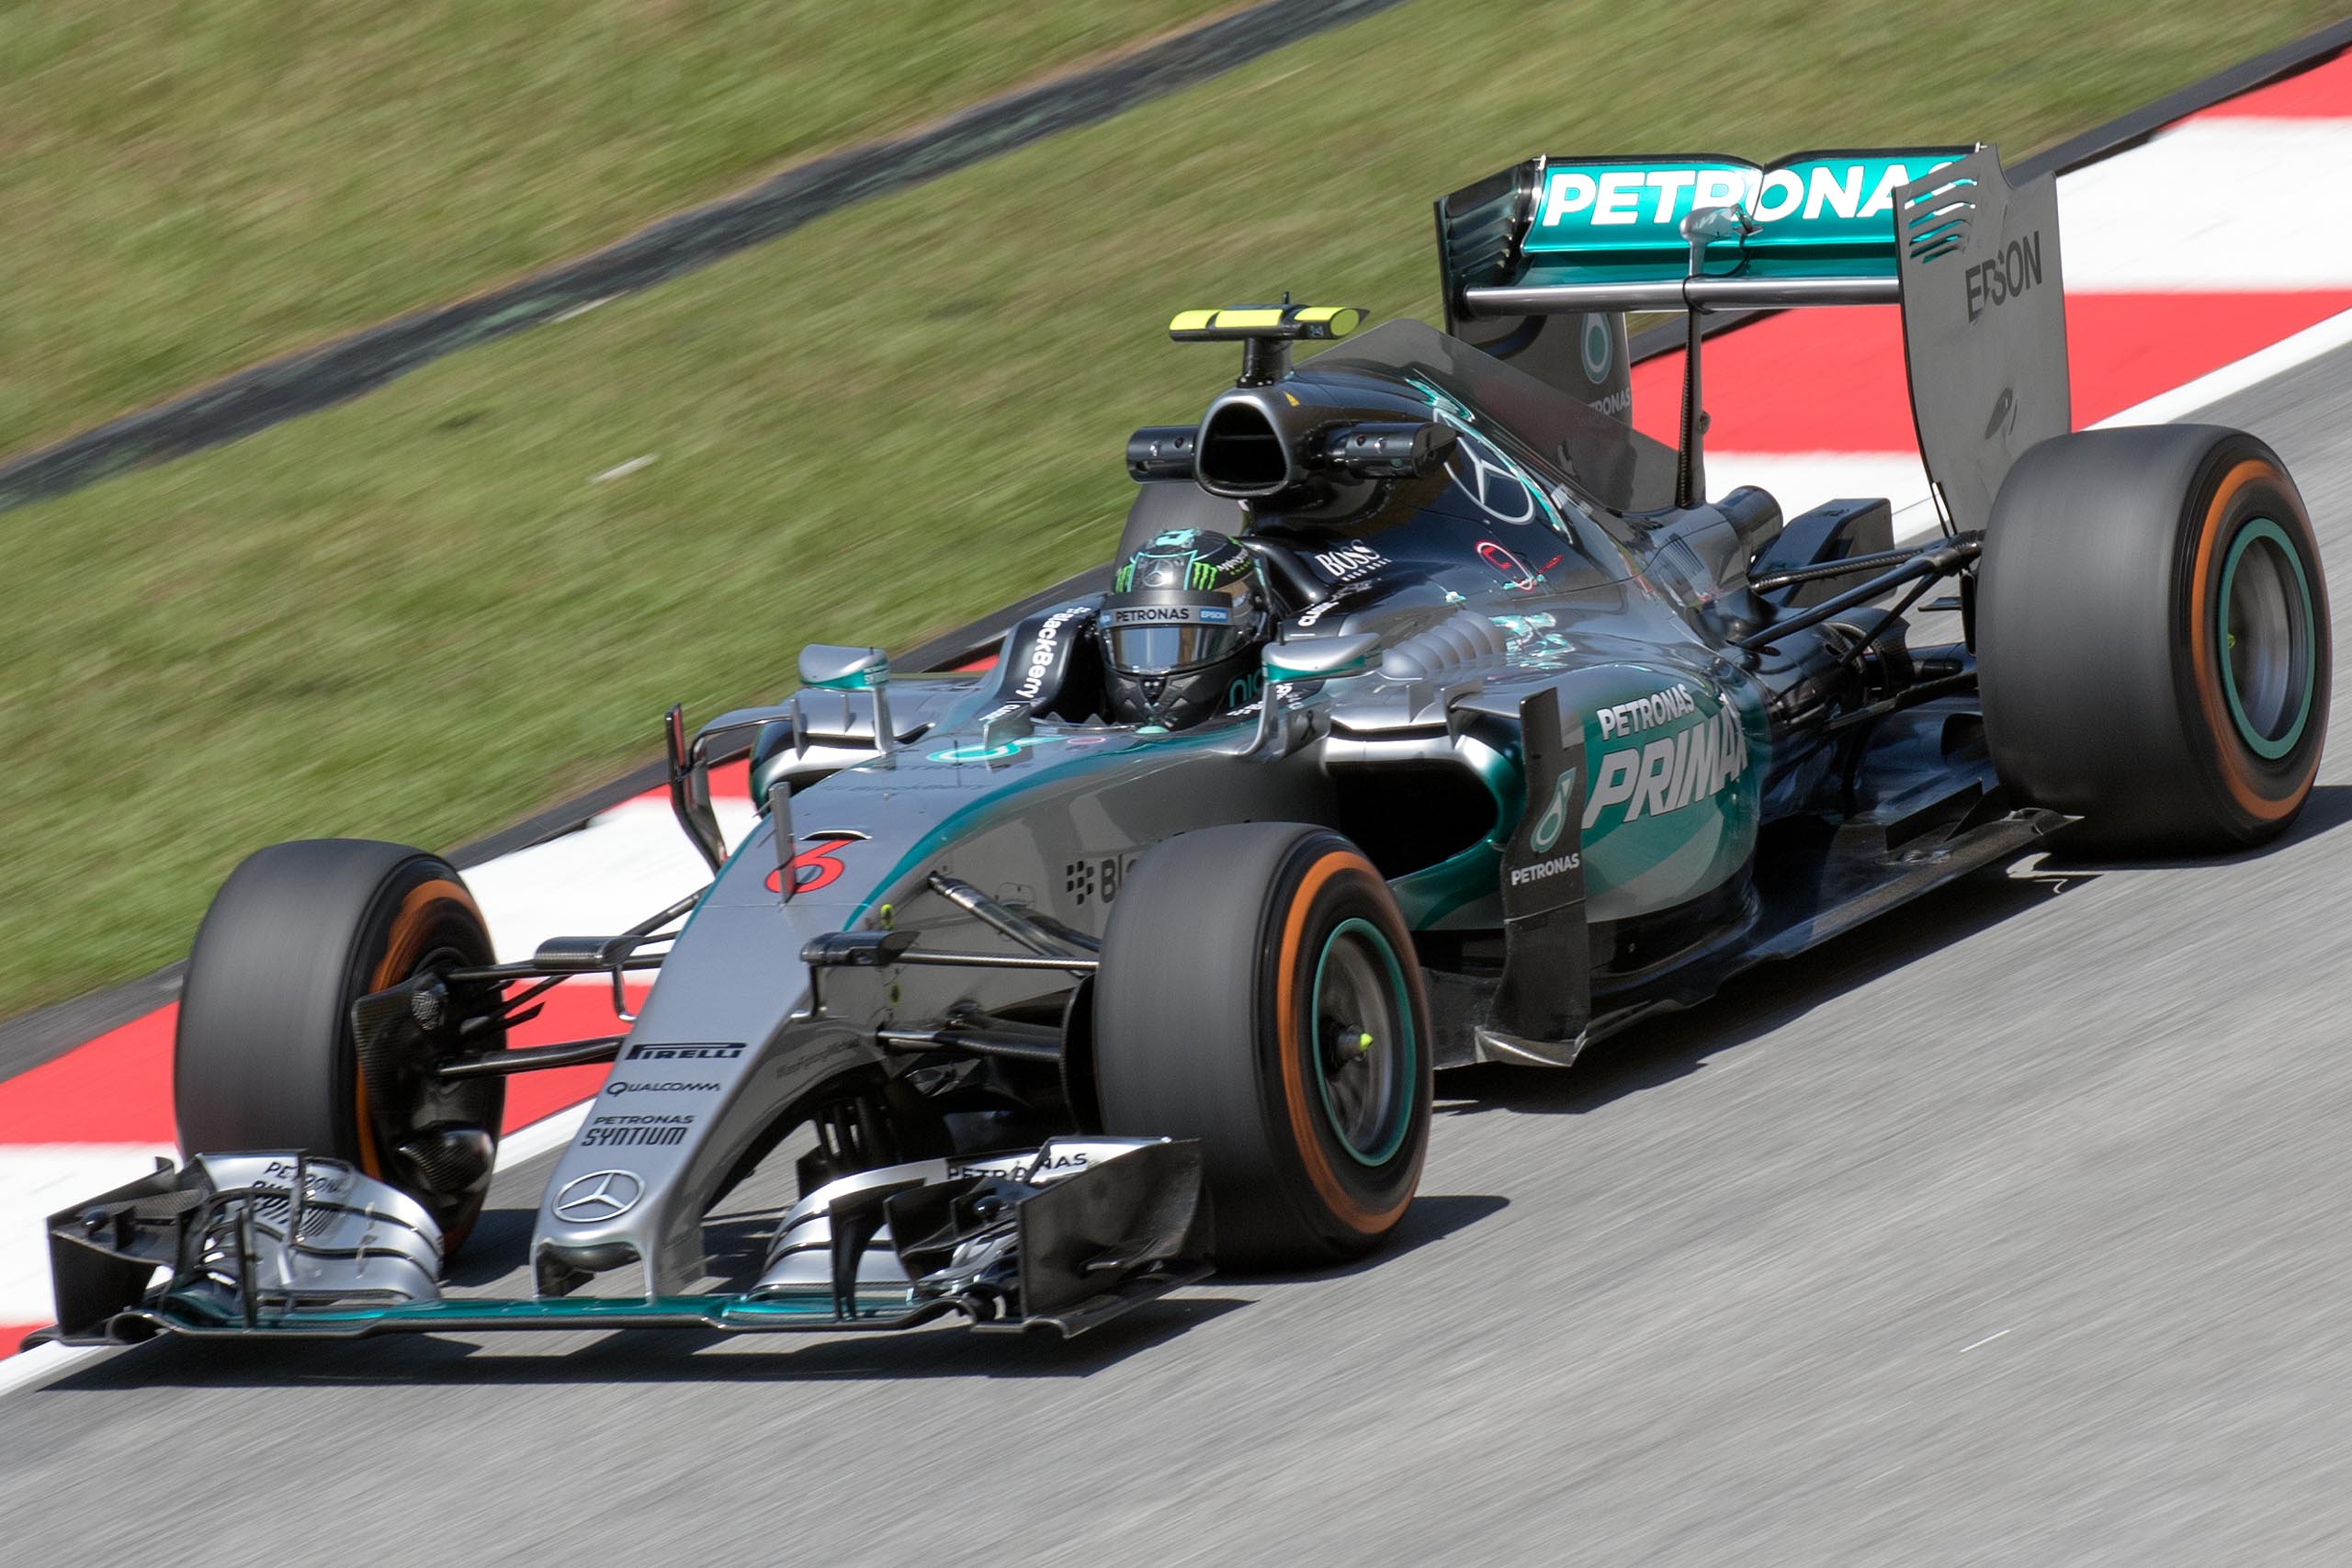 Petronas Defends Racing Sponsorship